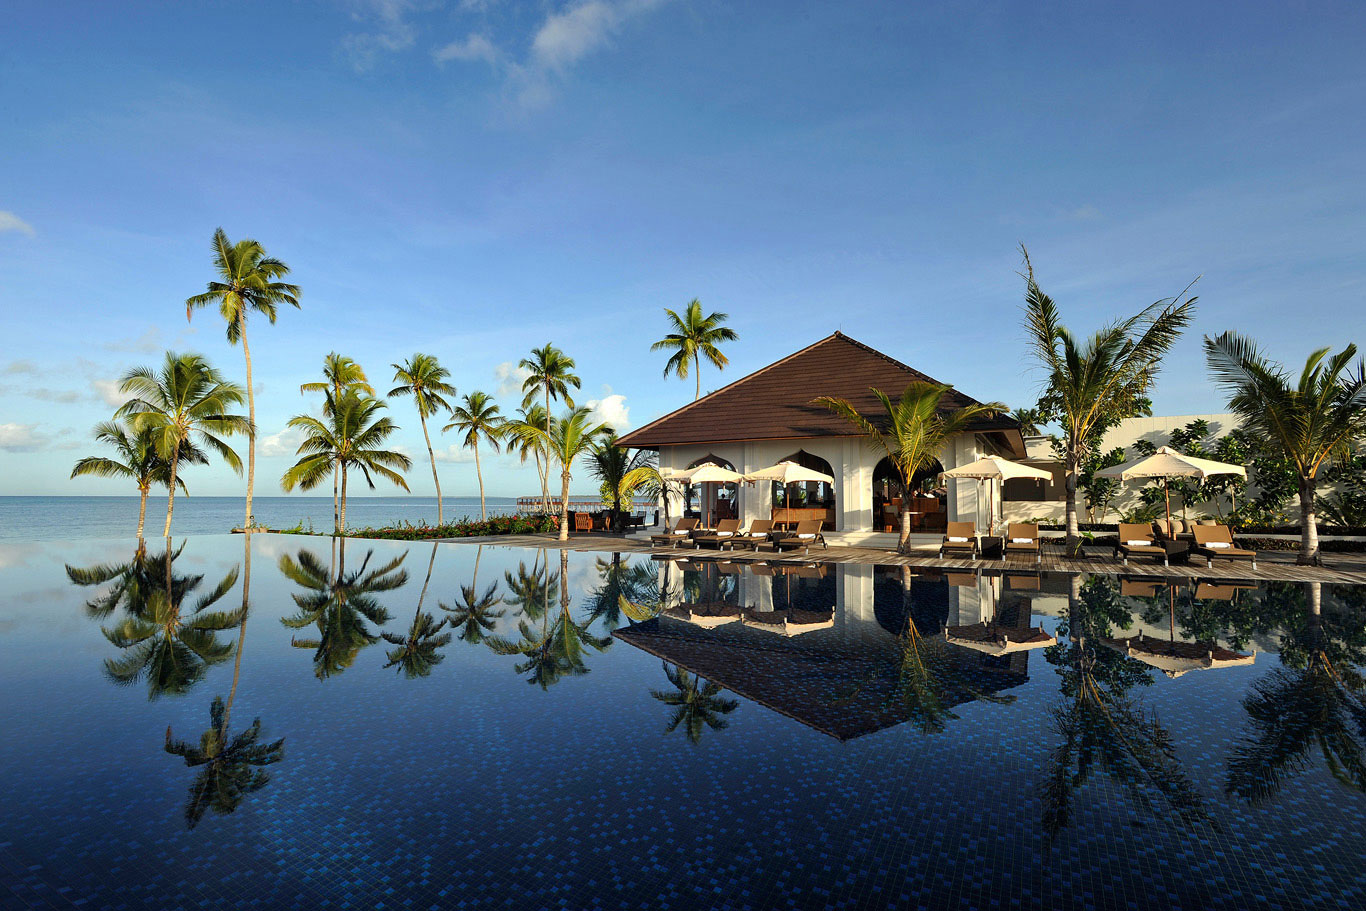 Book your ultimate Zanzibar luxury getaway today and experience unparalleled indulgence!